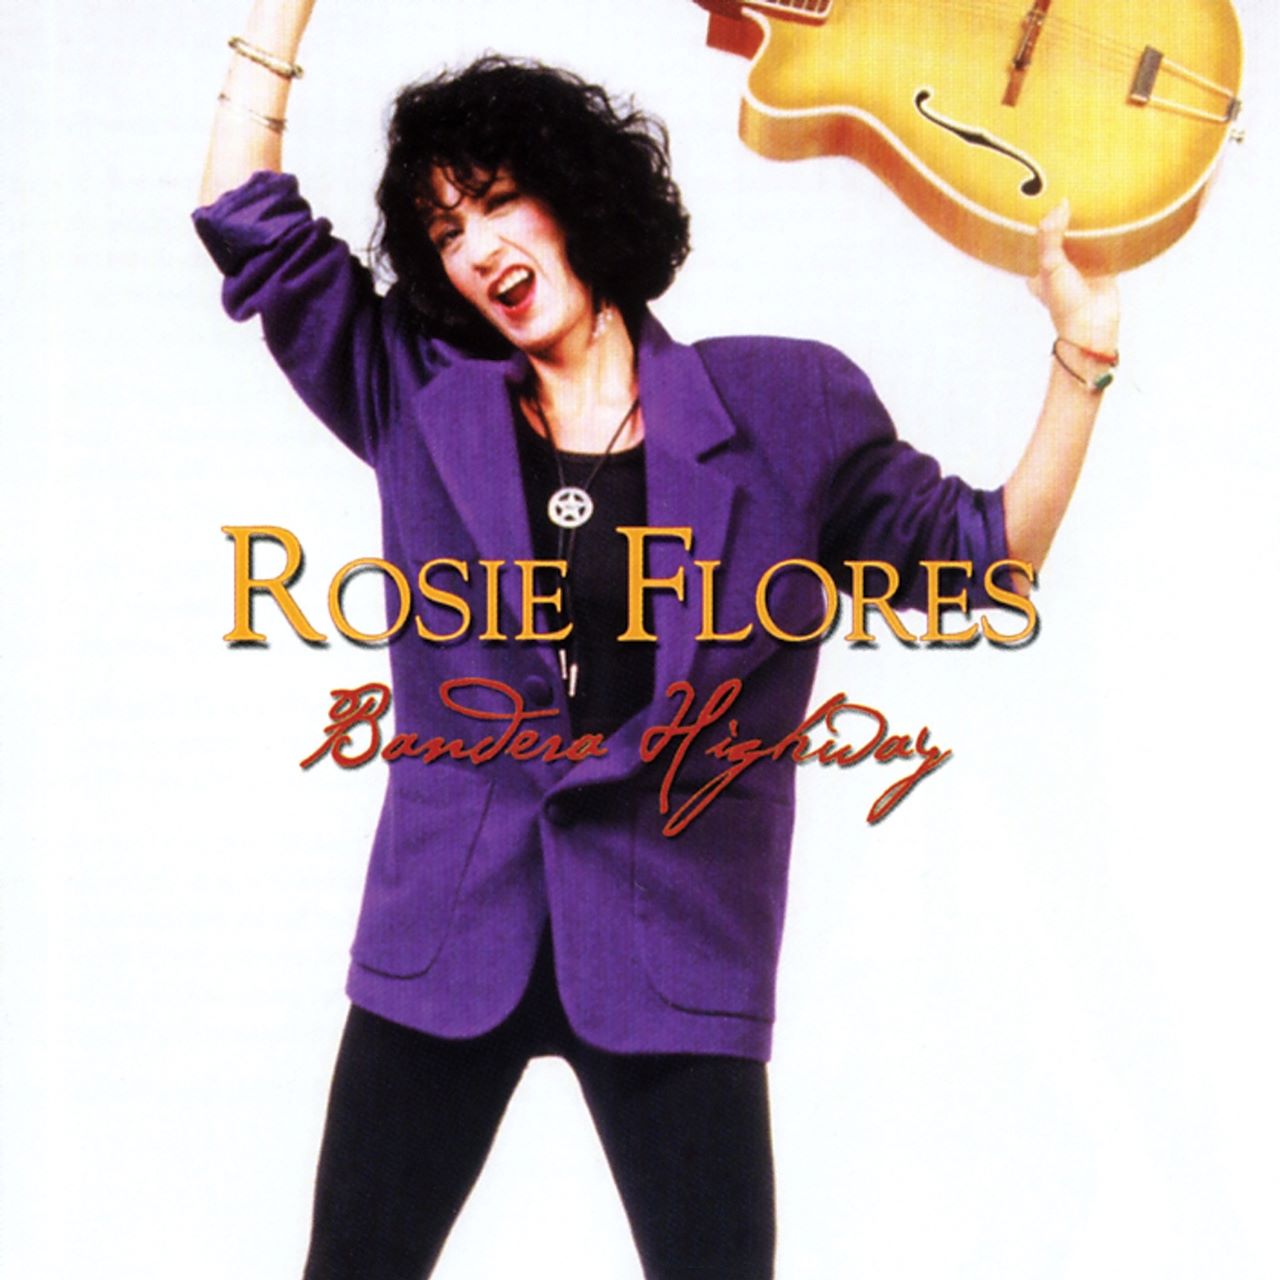 Rosie Flores - Bandera Highway cover album